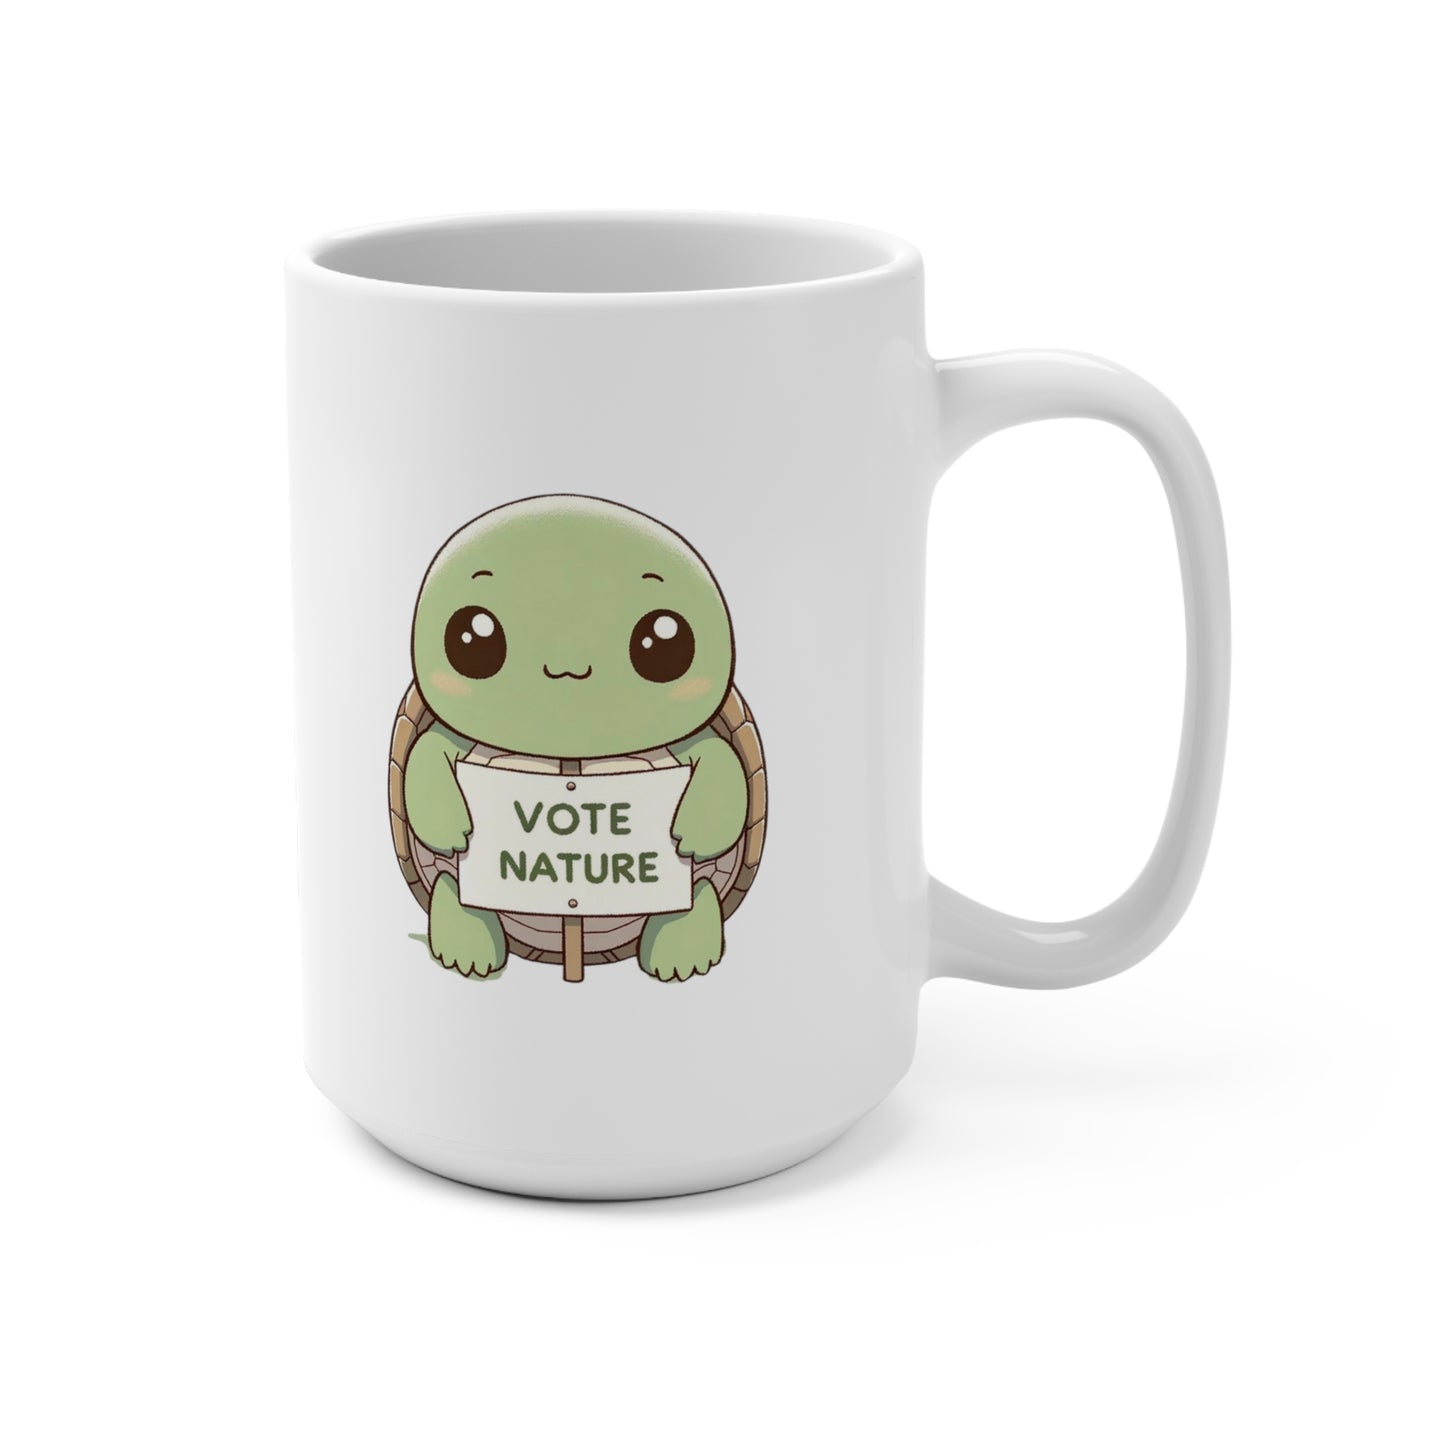 Inspirational Cute Turtle Statement Coffee Mug (15oz): Vote Nature! Be a cute activist!